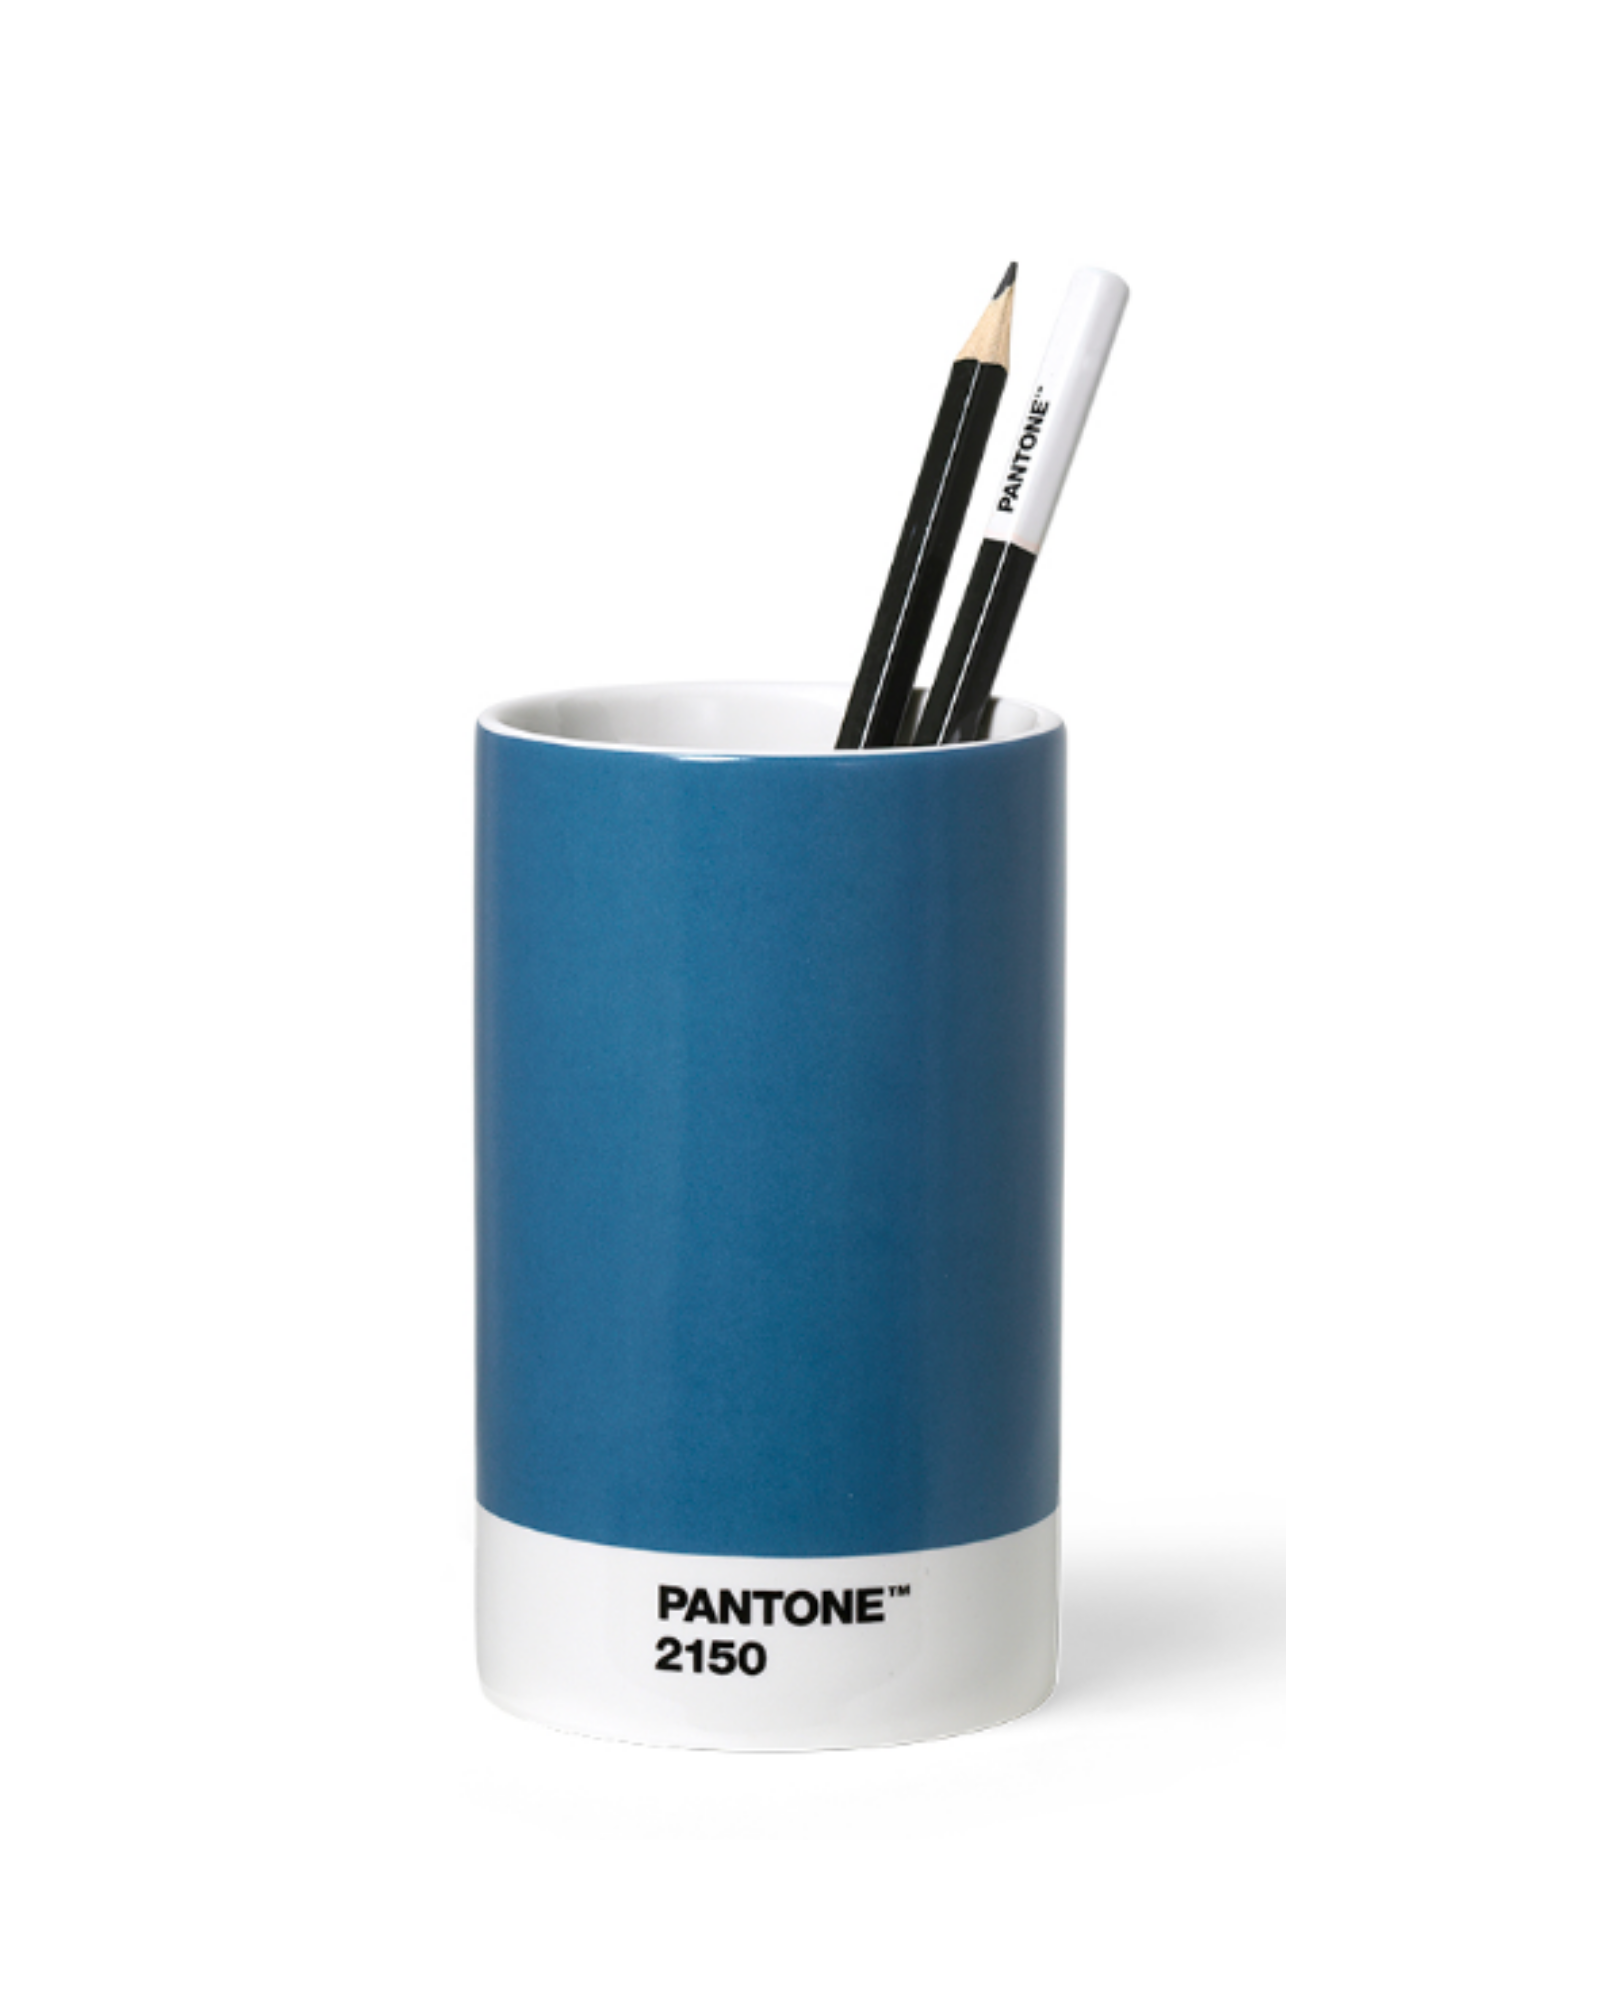  PANTONE PENCIL CUP - BLUE 